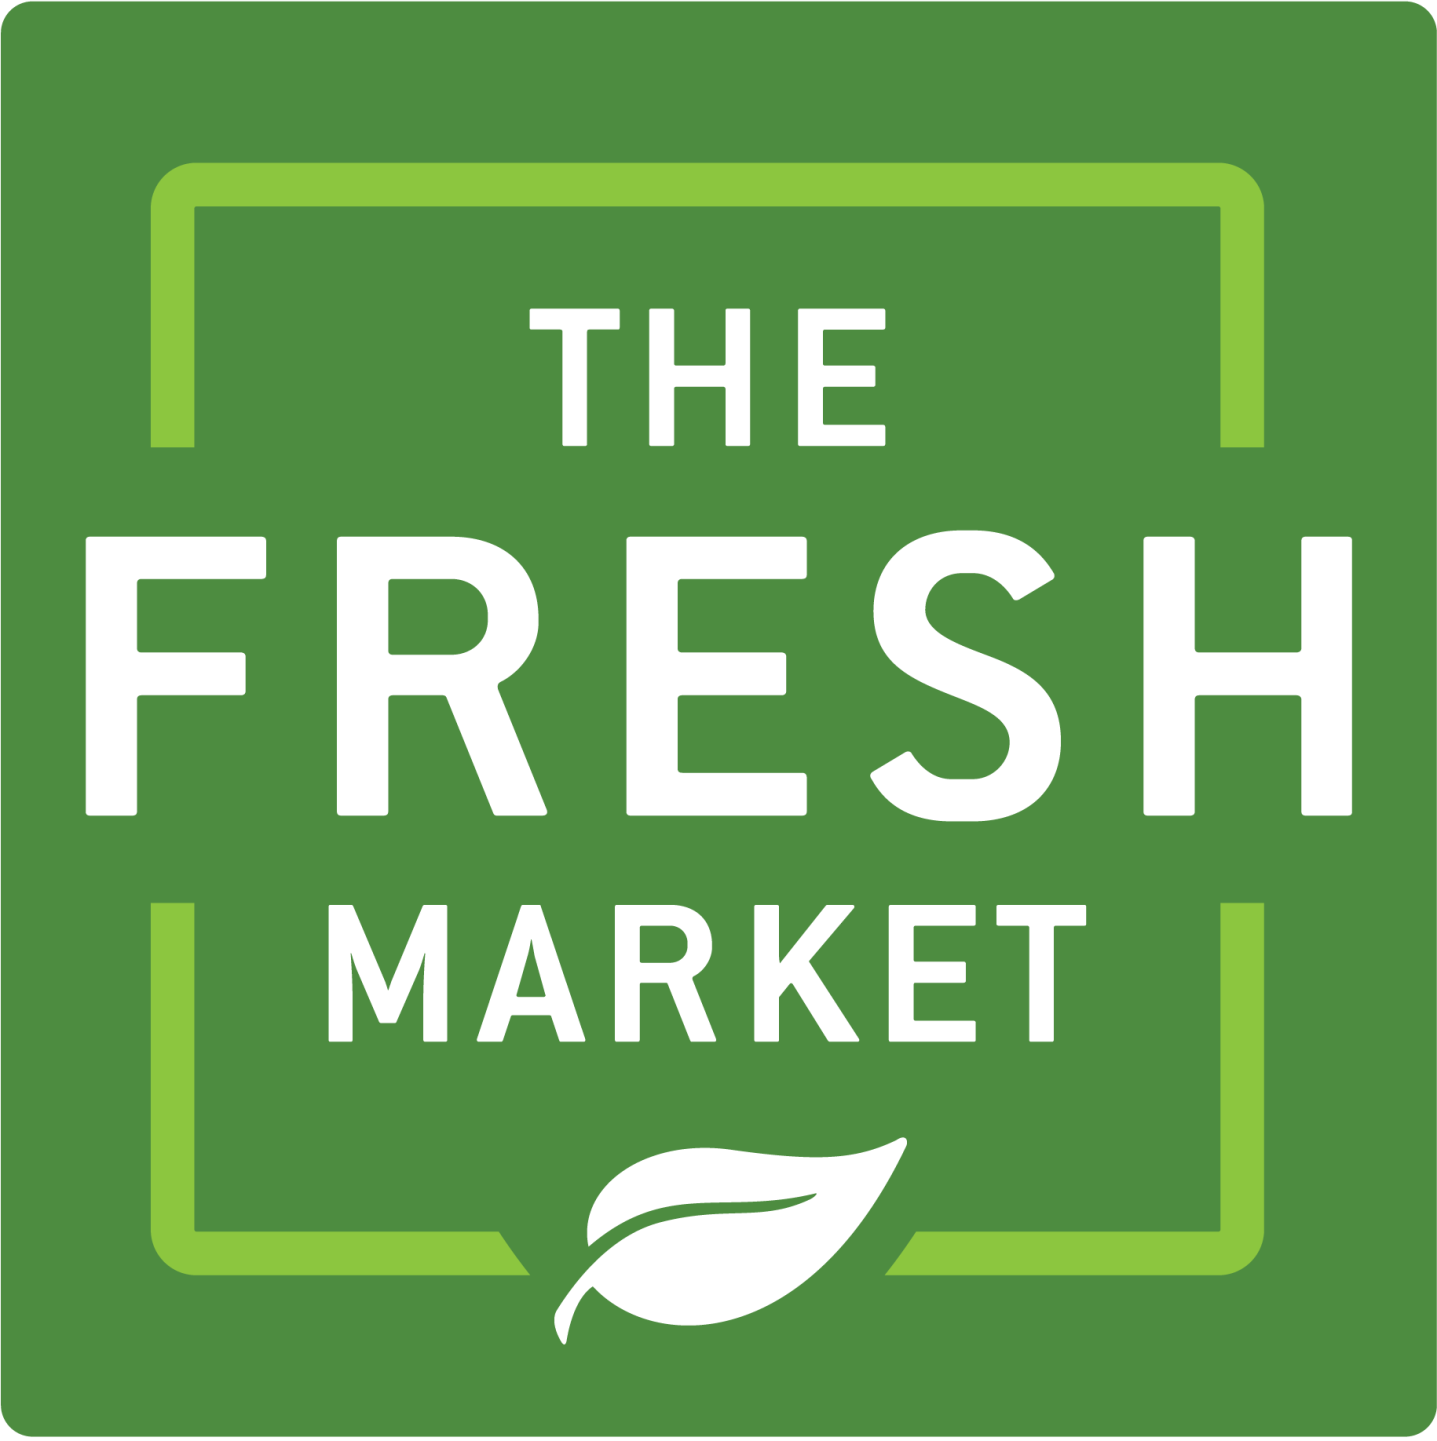 fresh market